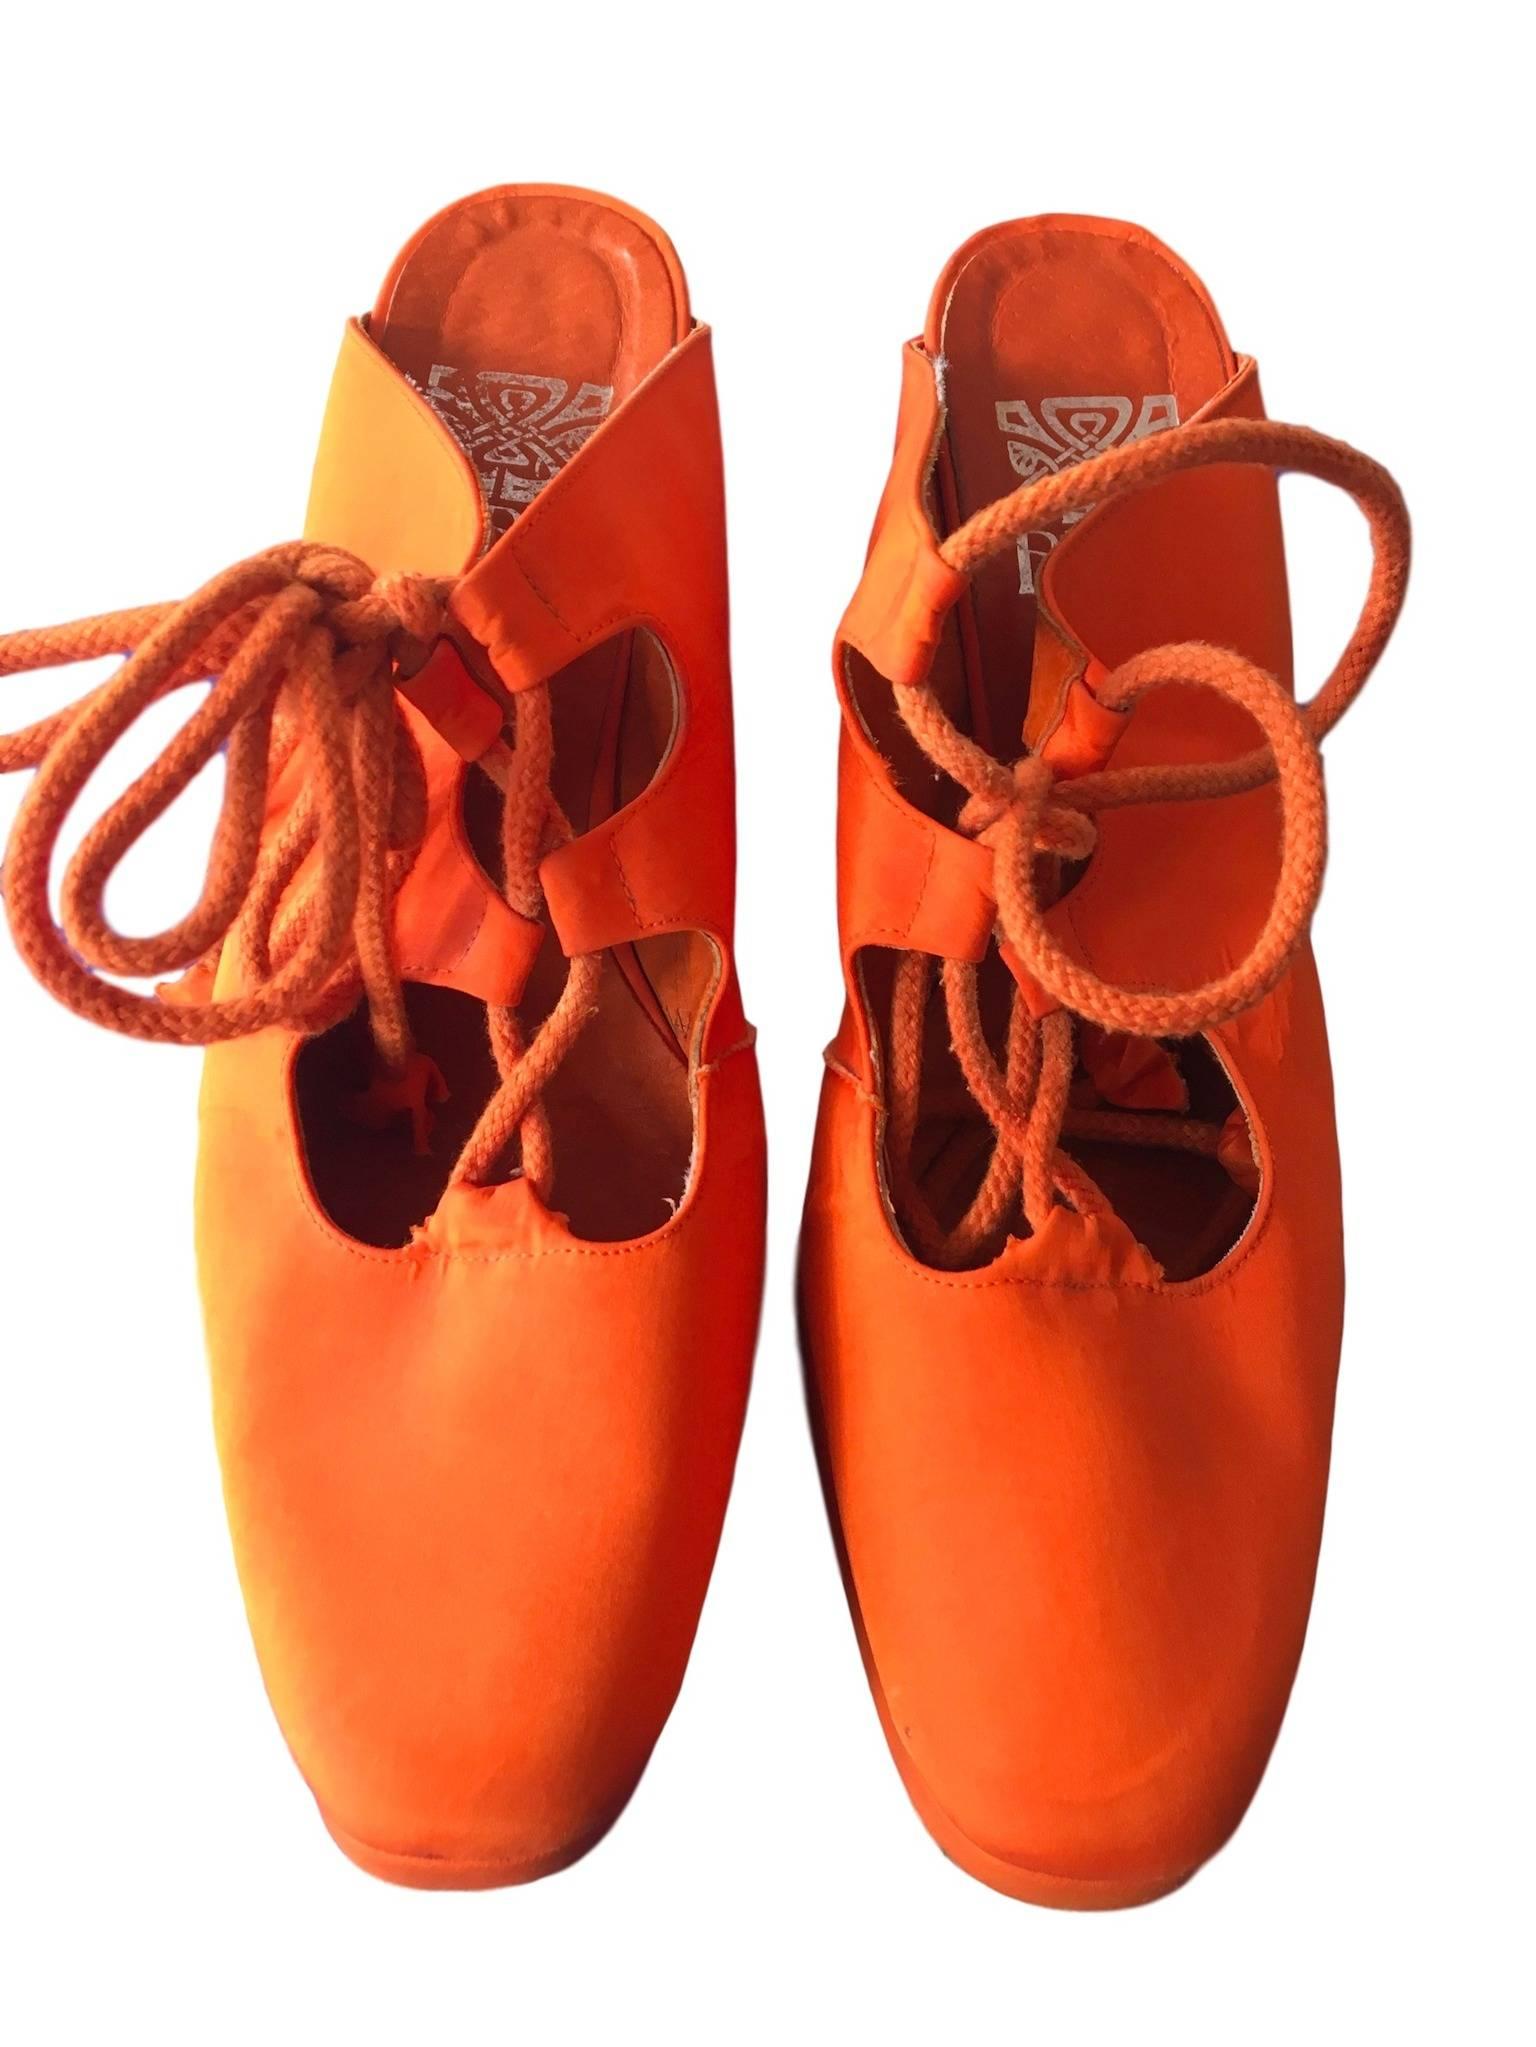 Red Biba Vintage Platform shoes Orange UK 7 EU 40